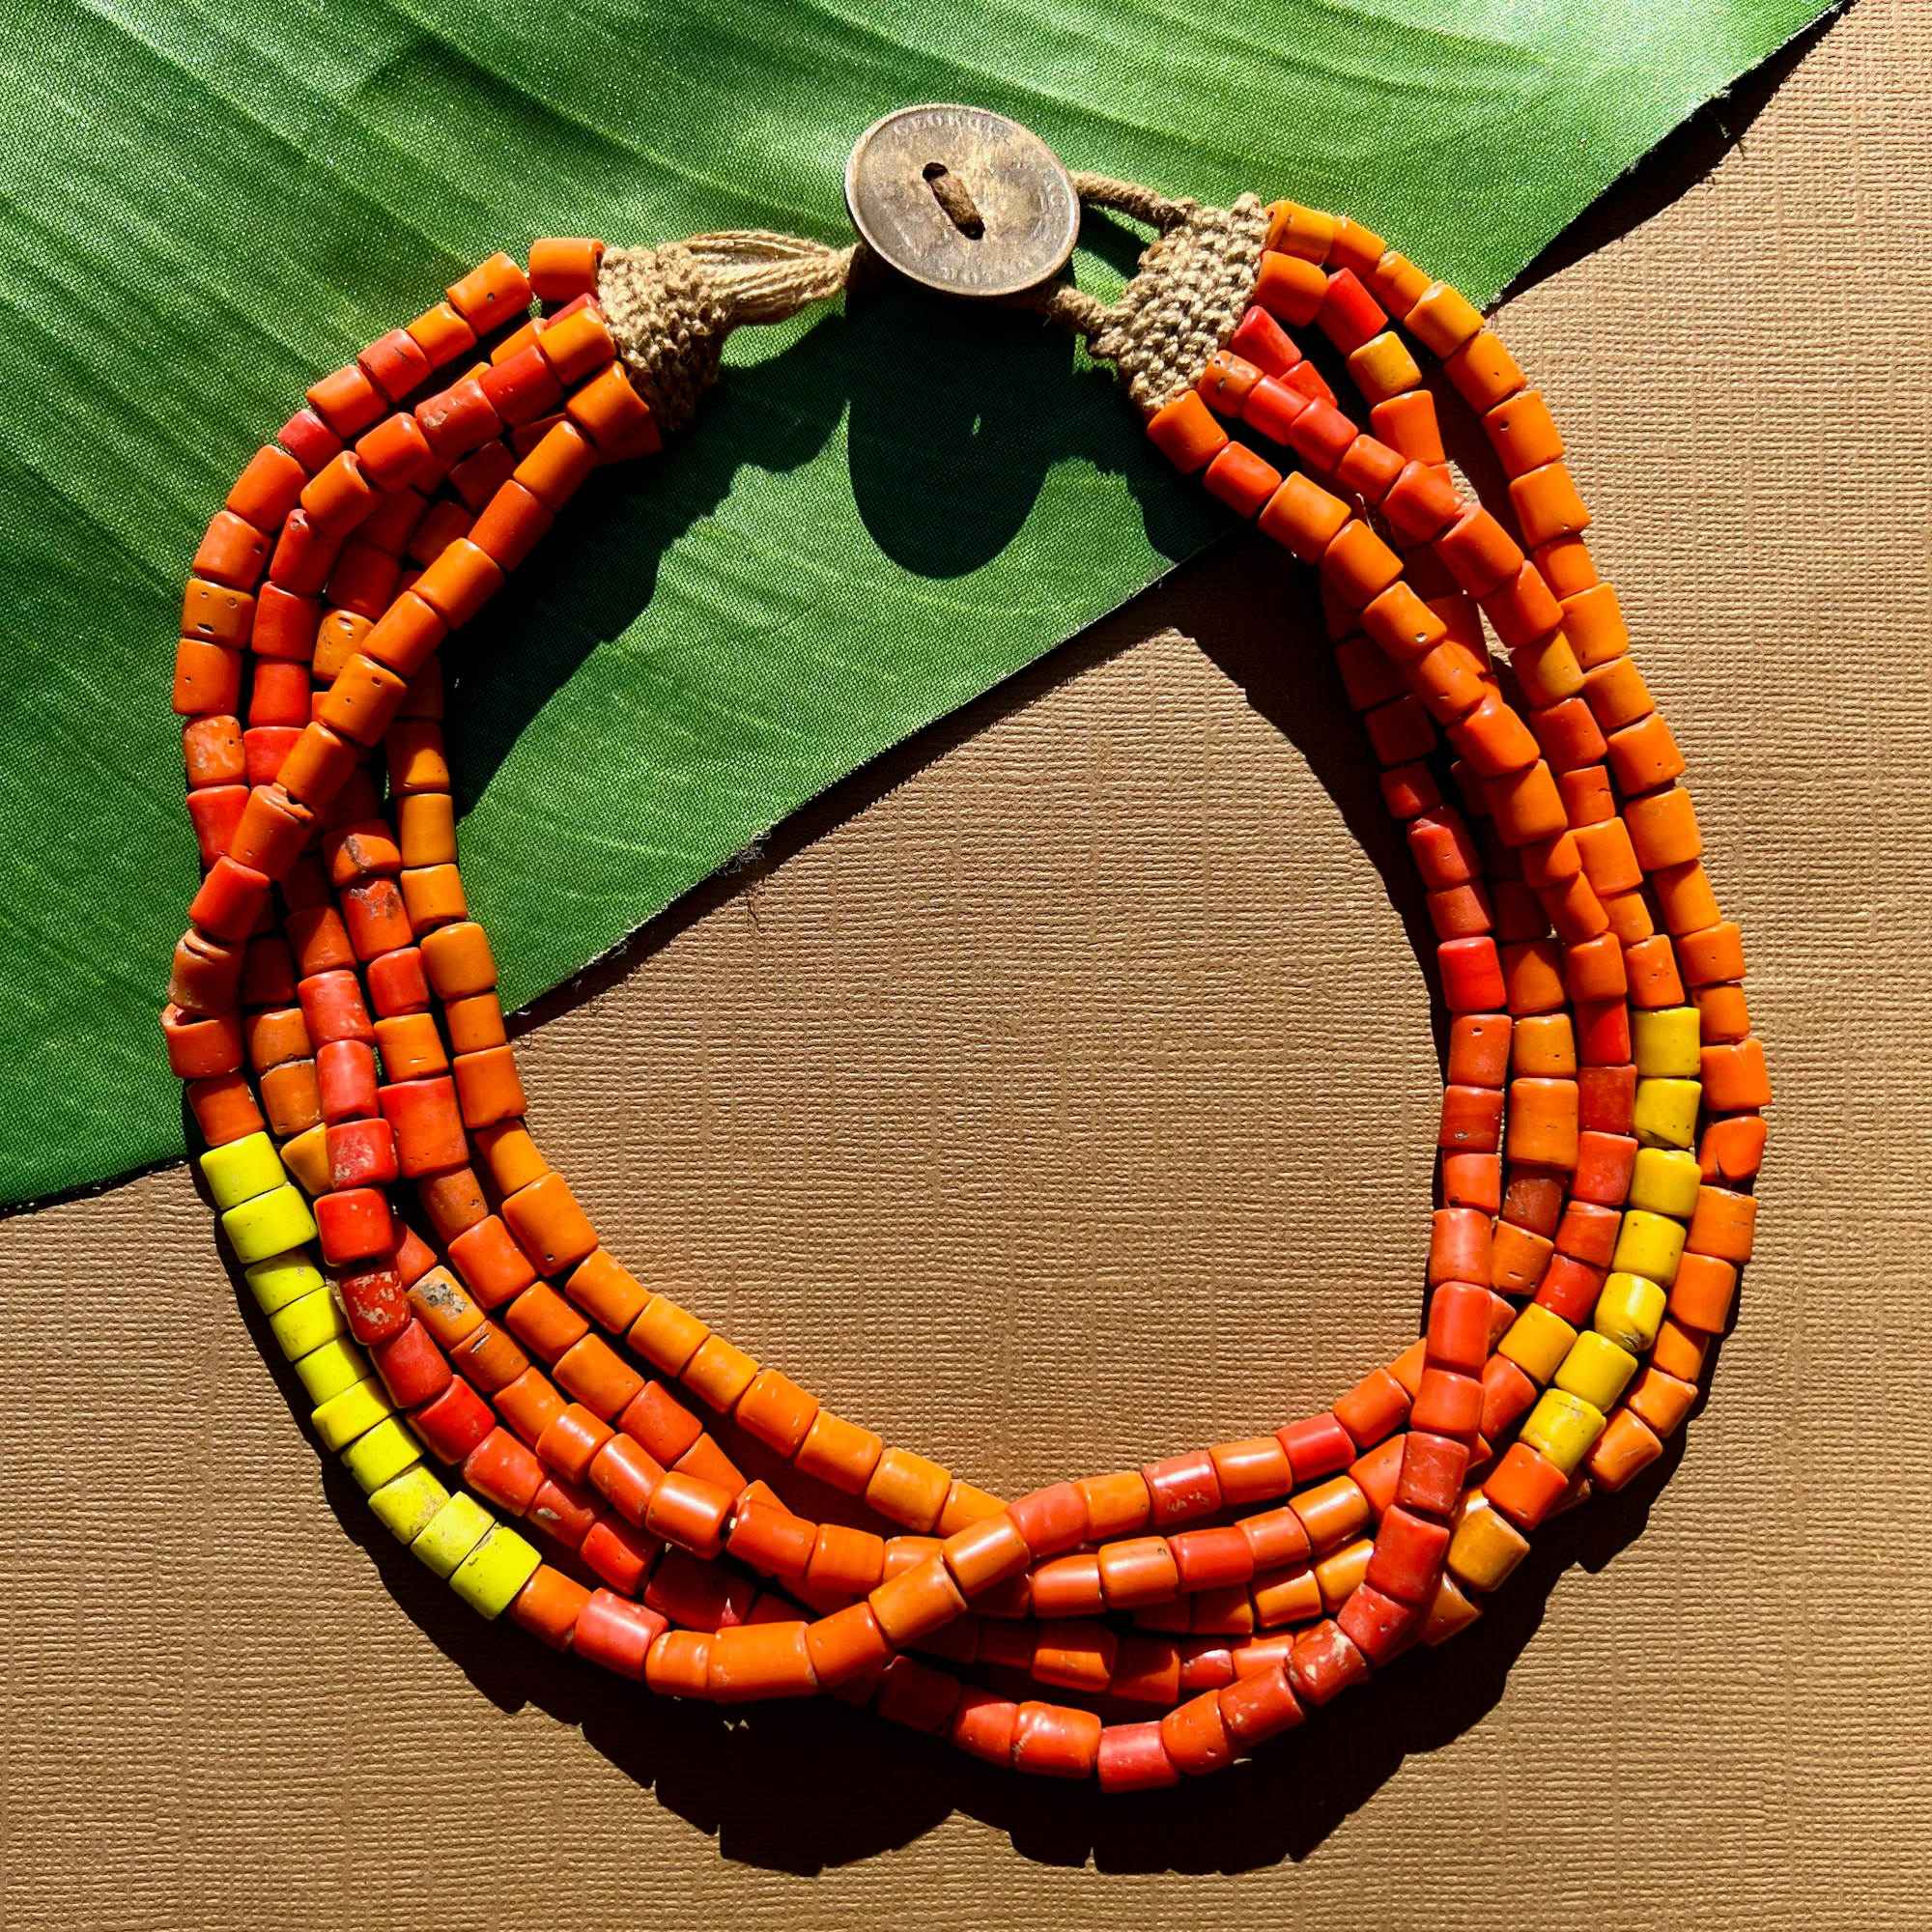 Orange & Yellow Naga Glass Necklace